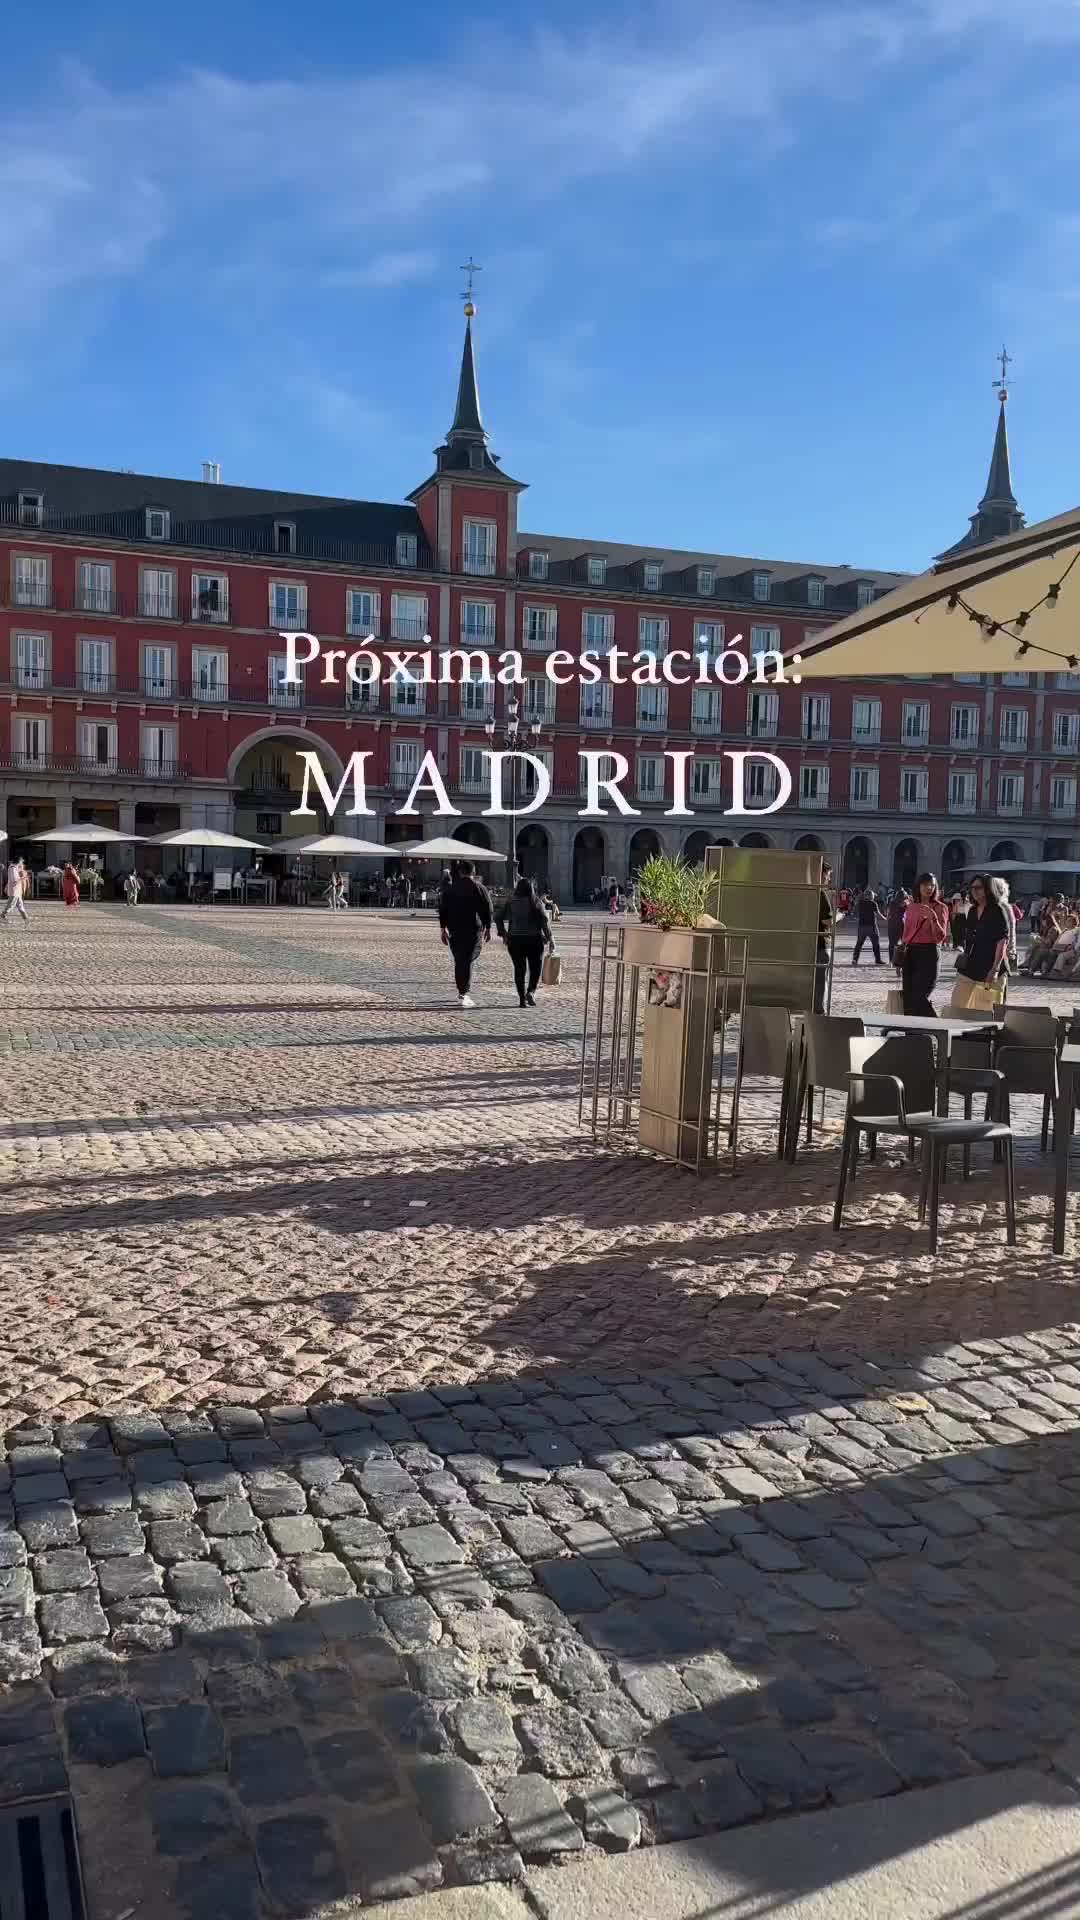 Este es un recordatorio para que visites Madrid pronto! / Your reminder to book a trip to Madrid and enjoy this stunning city 😍
.
.
.
.
#madrid #madridespaña #madridspain #metromadrid #madrid❤️ #madridcity #madridlife #madridcityworld